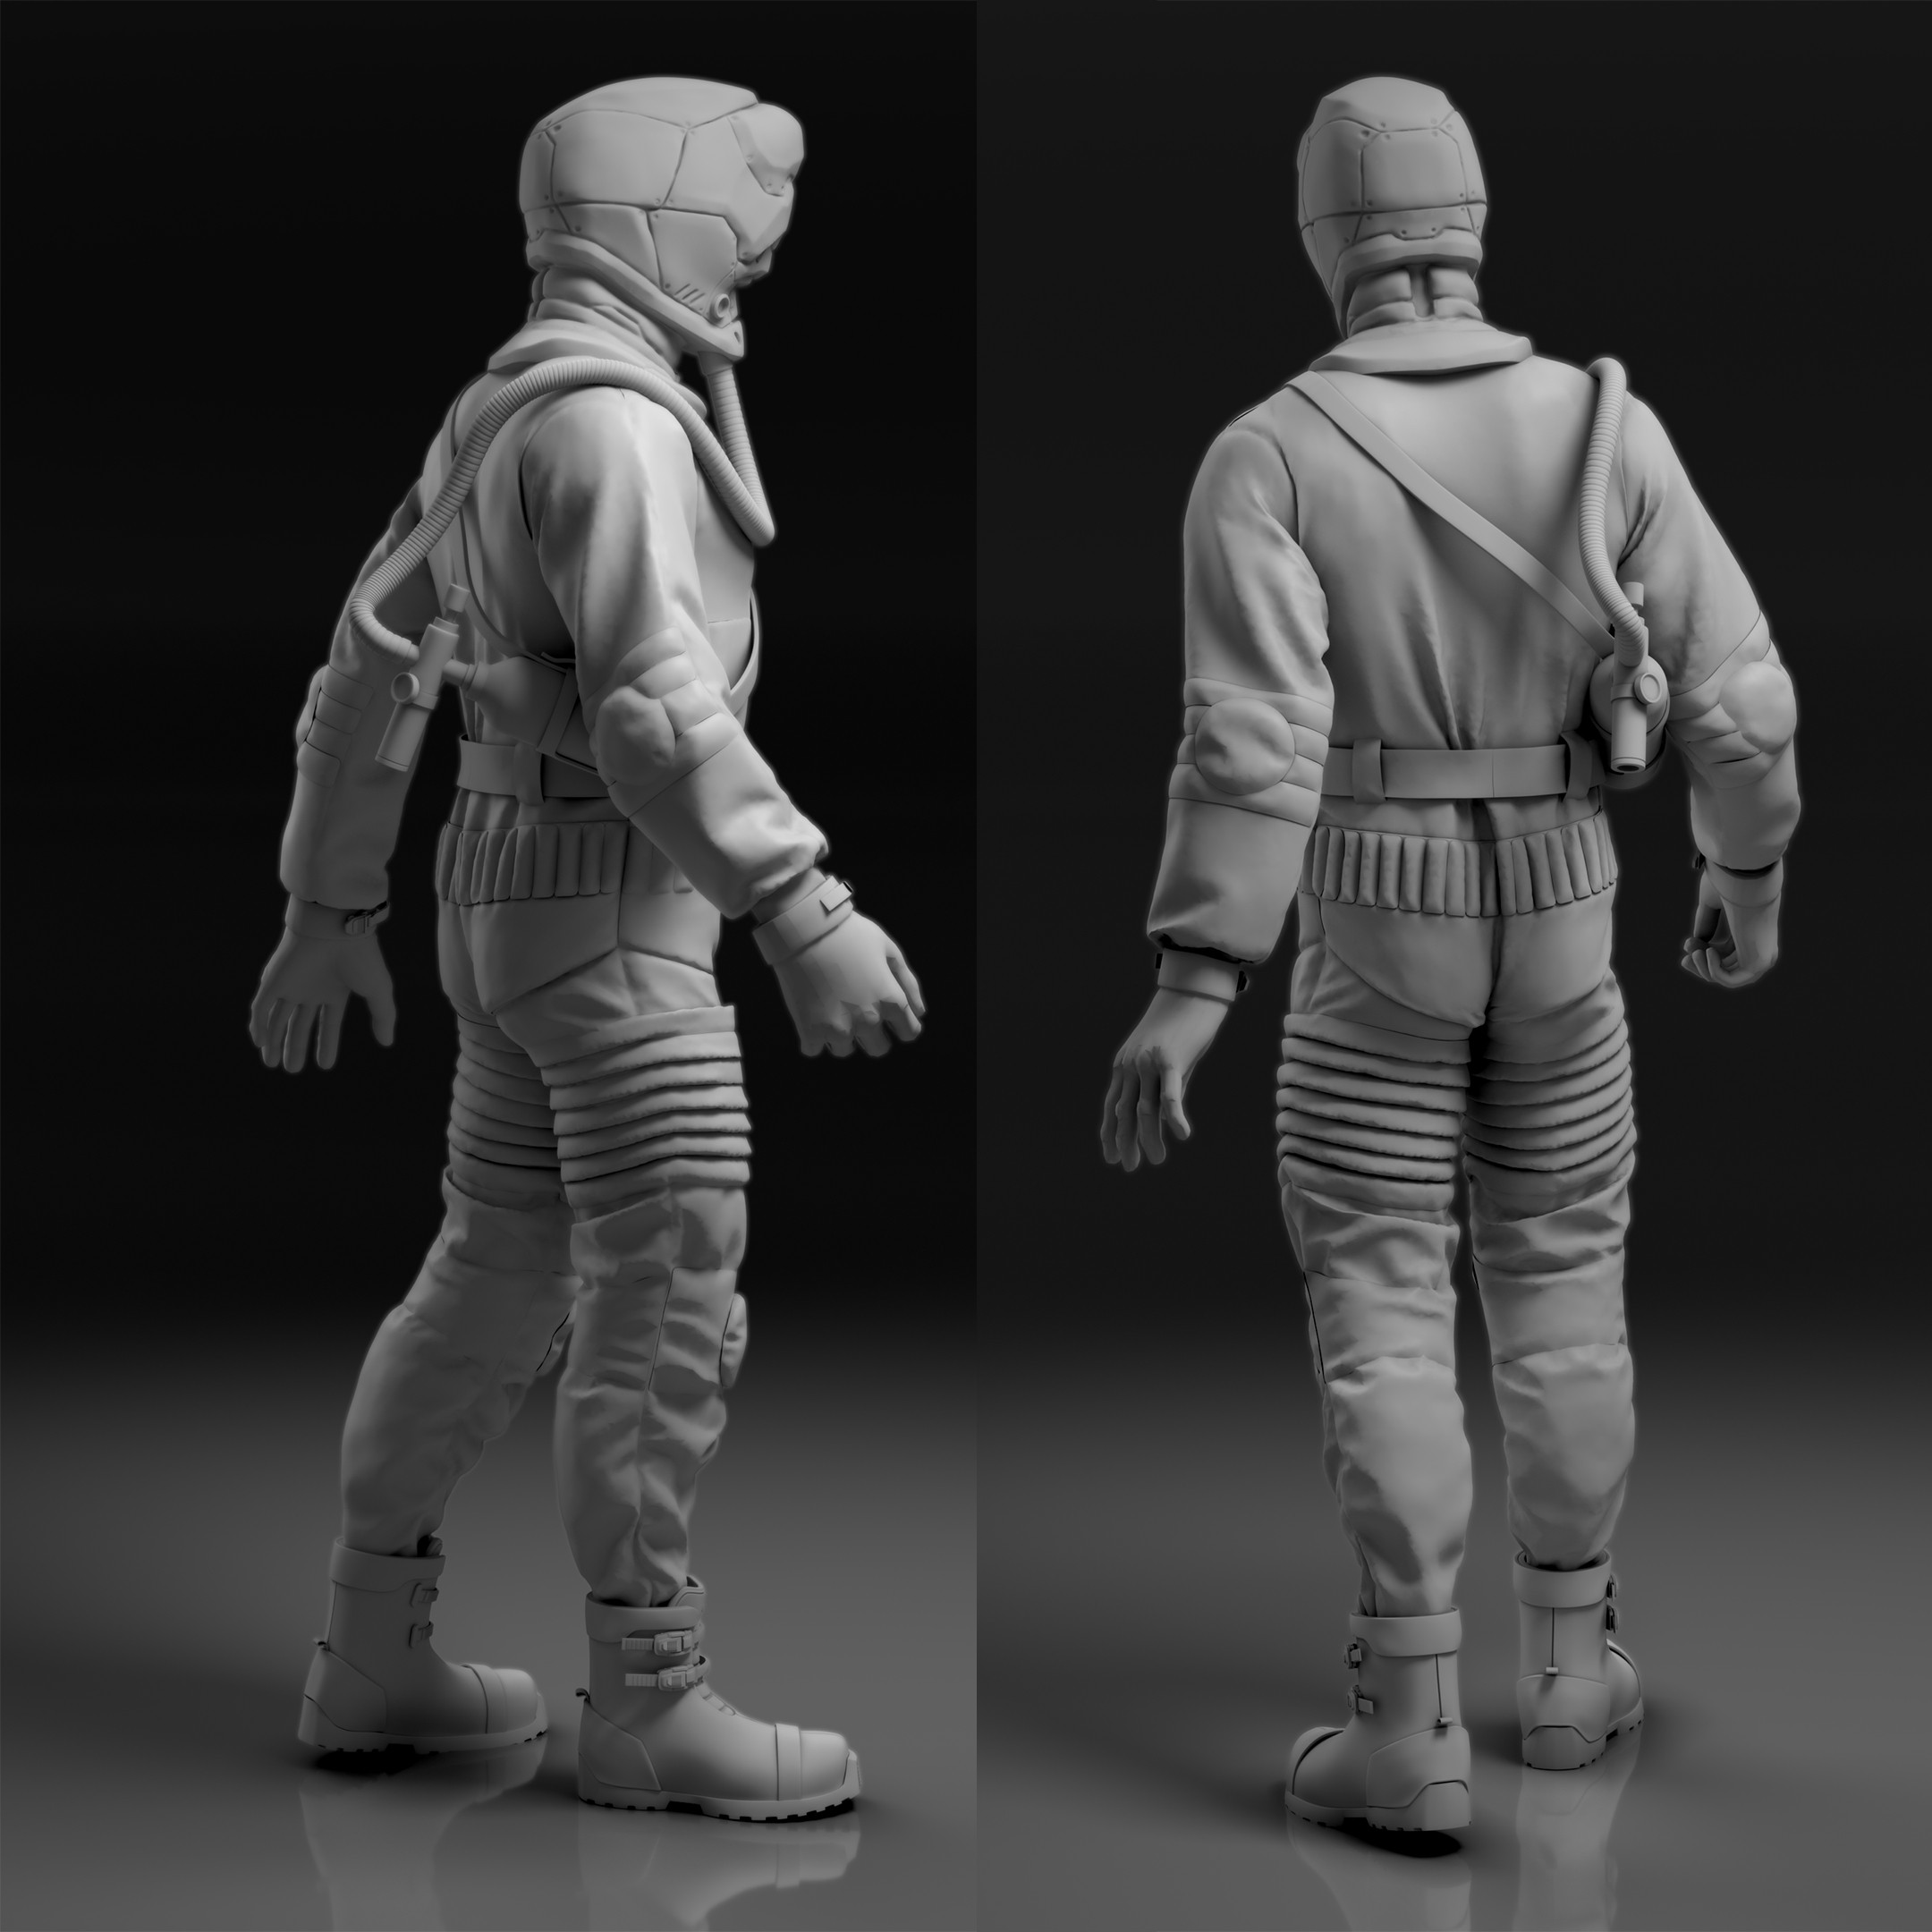 Sci-fi scientist/astronaut/worker 3d concept render.